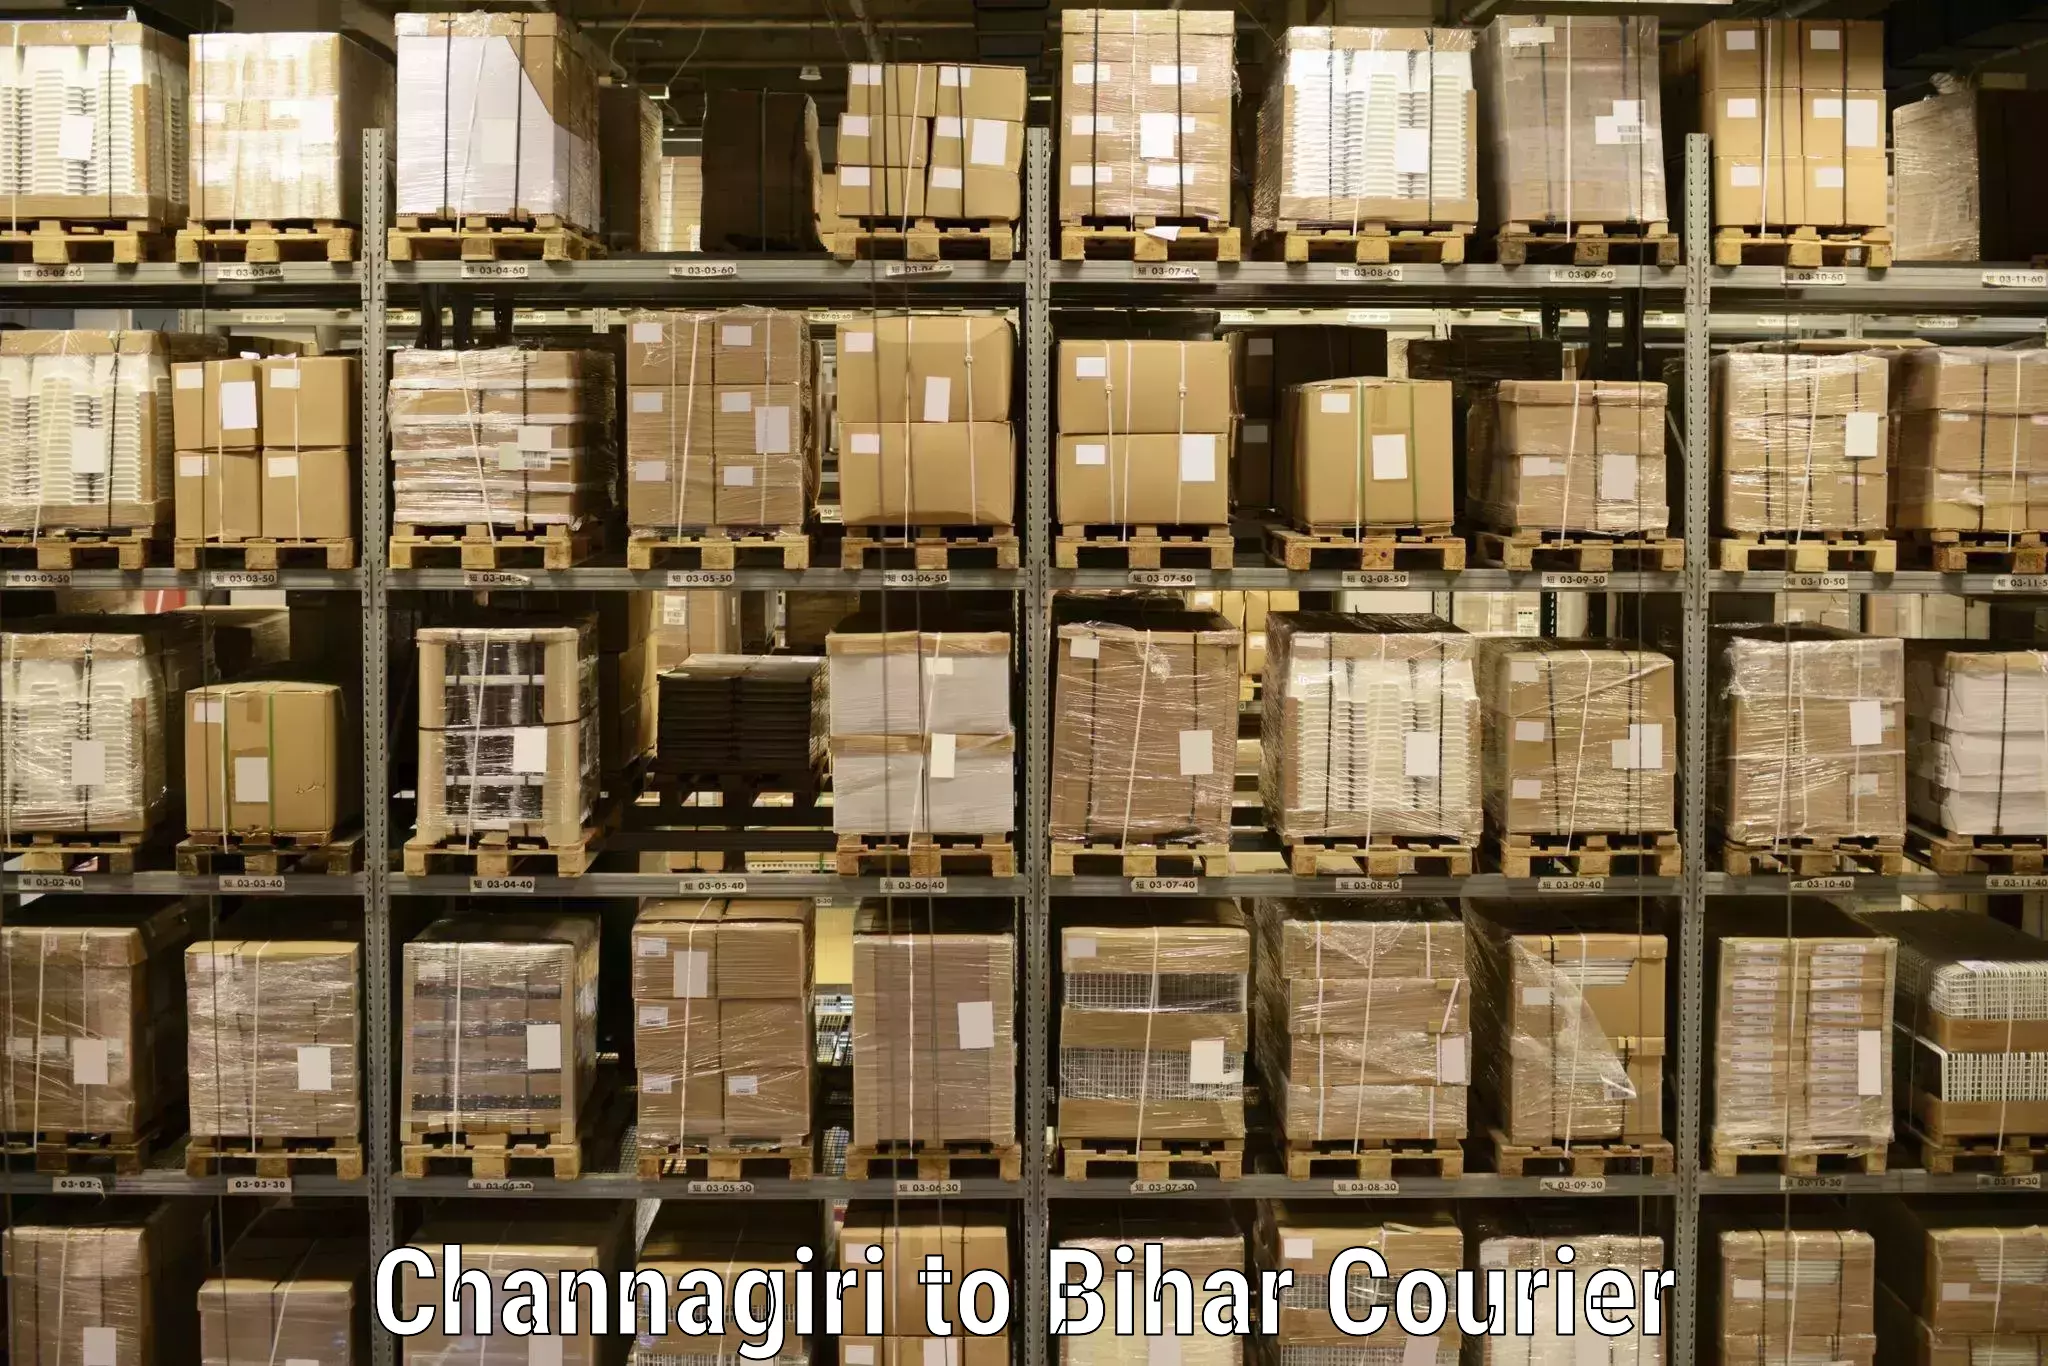 Urgent courier needs Channagiri to Bharwara